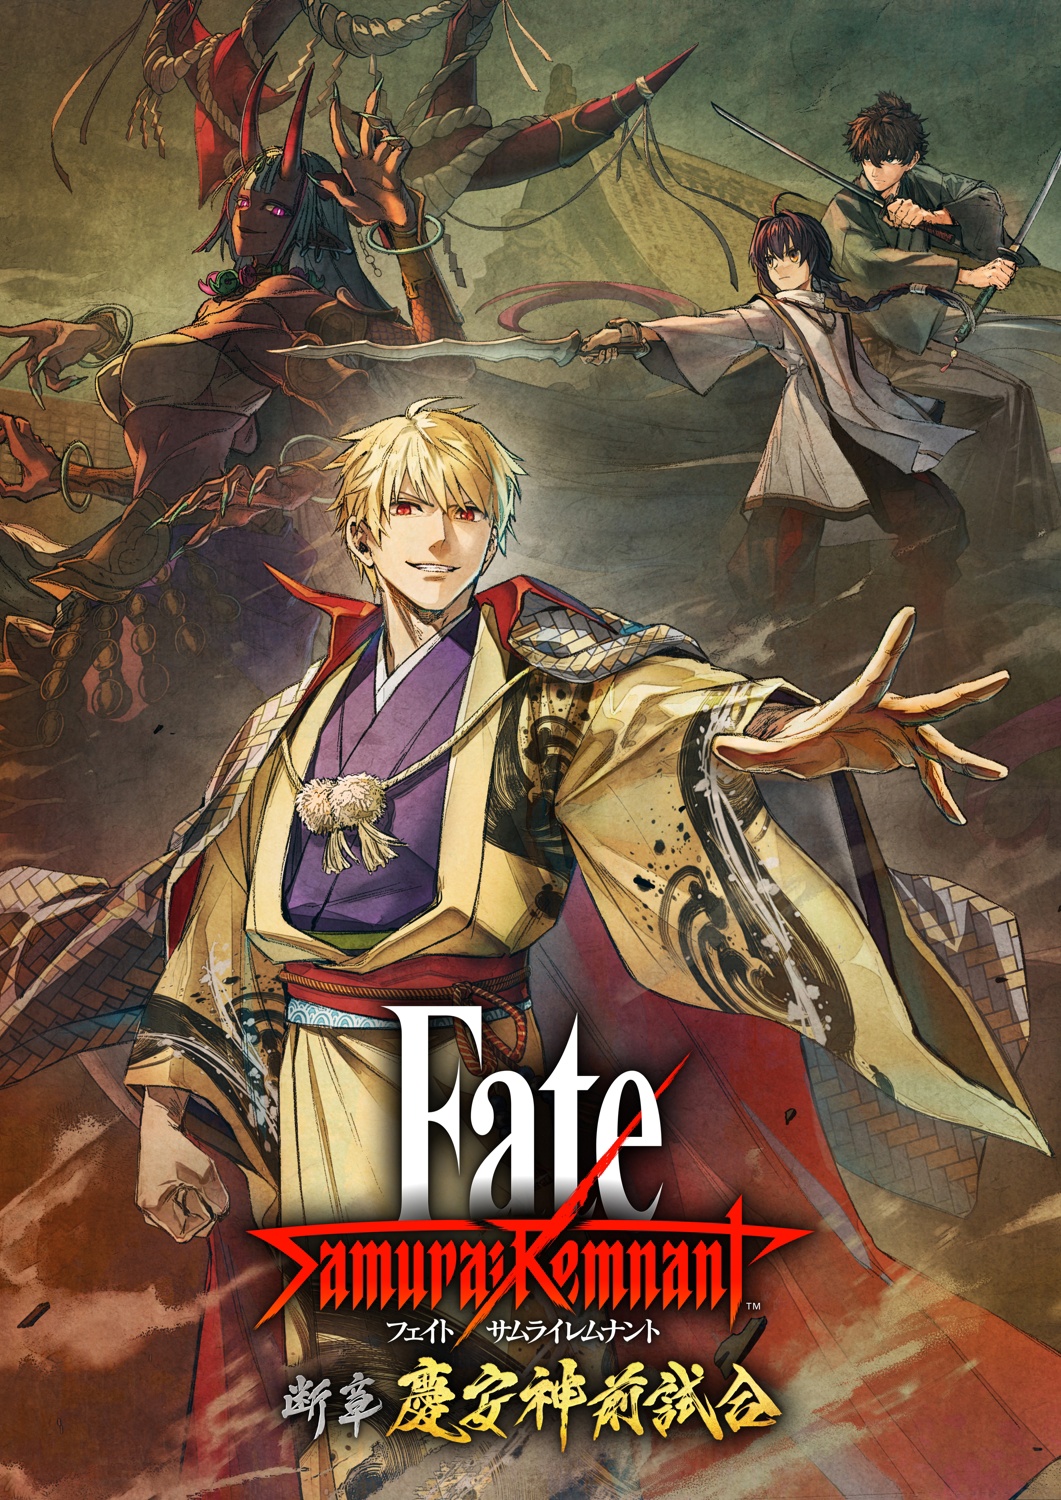 《Fate / Samurai Remnant》第 1 部 DLC 发售，Steam 国区 89 元